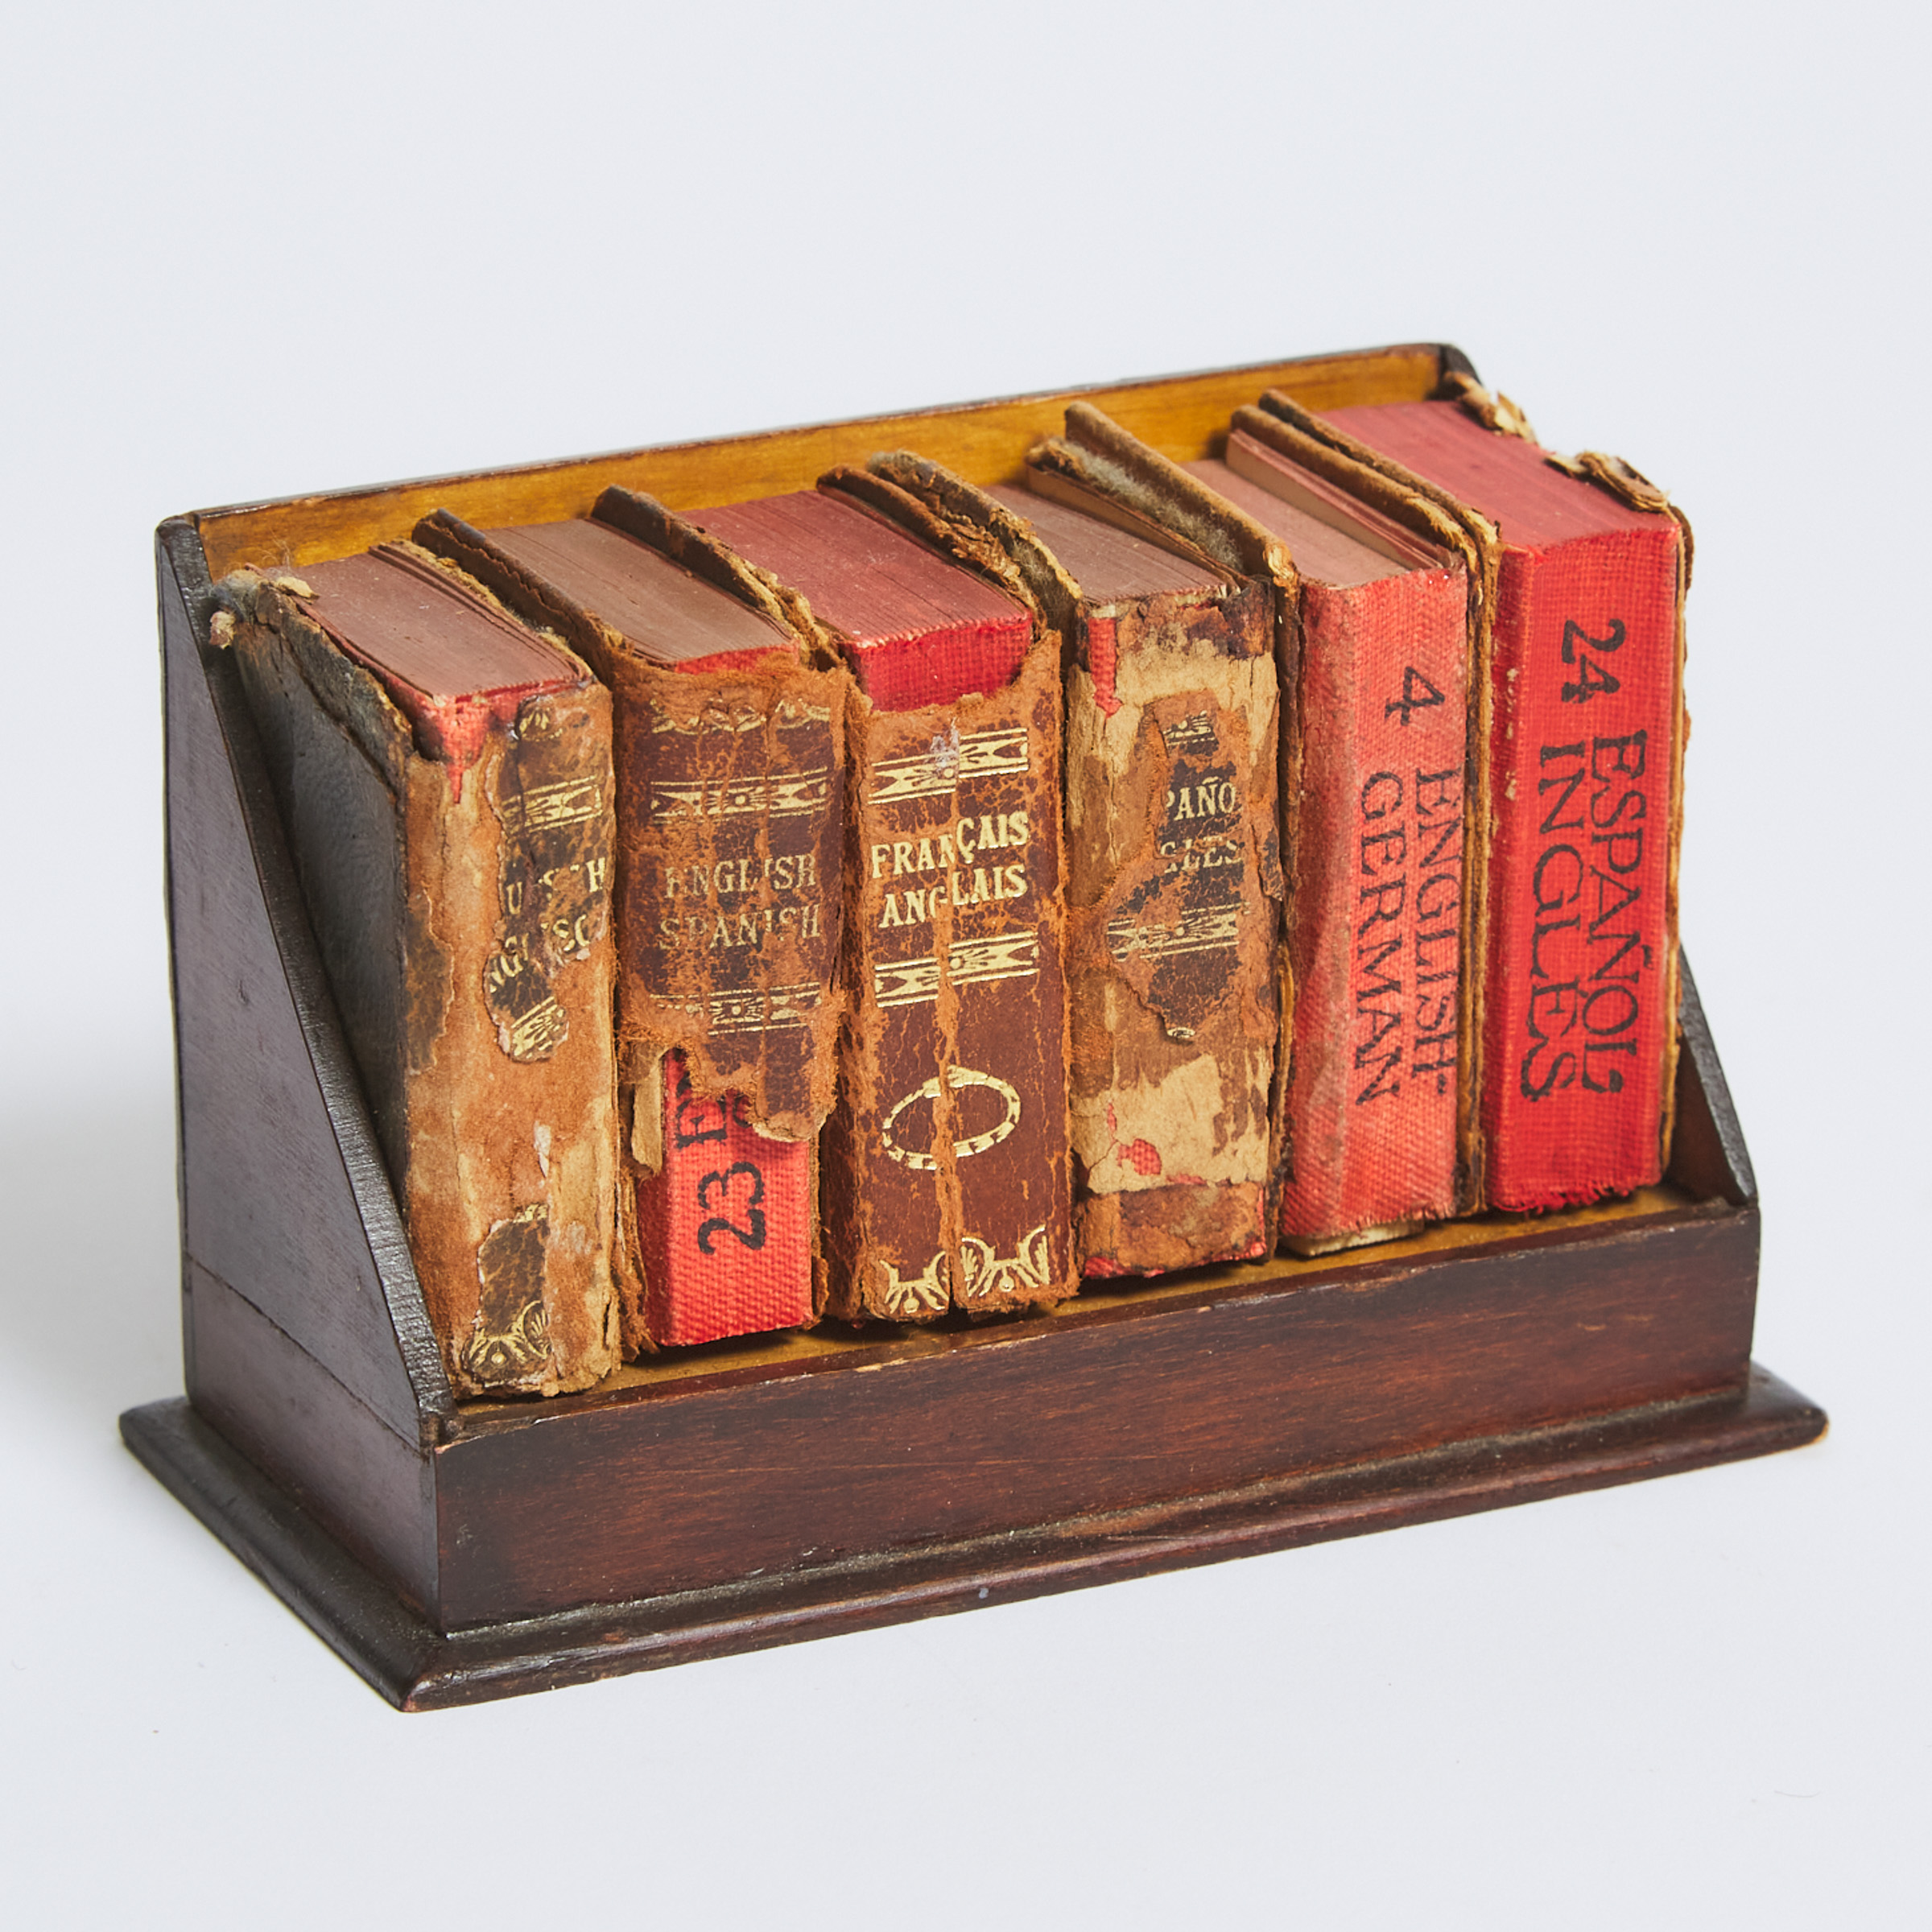 Set of Six 'Lilliput Wörterbuch' Miniature Translation Dictionaries, early 20th century